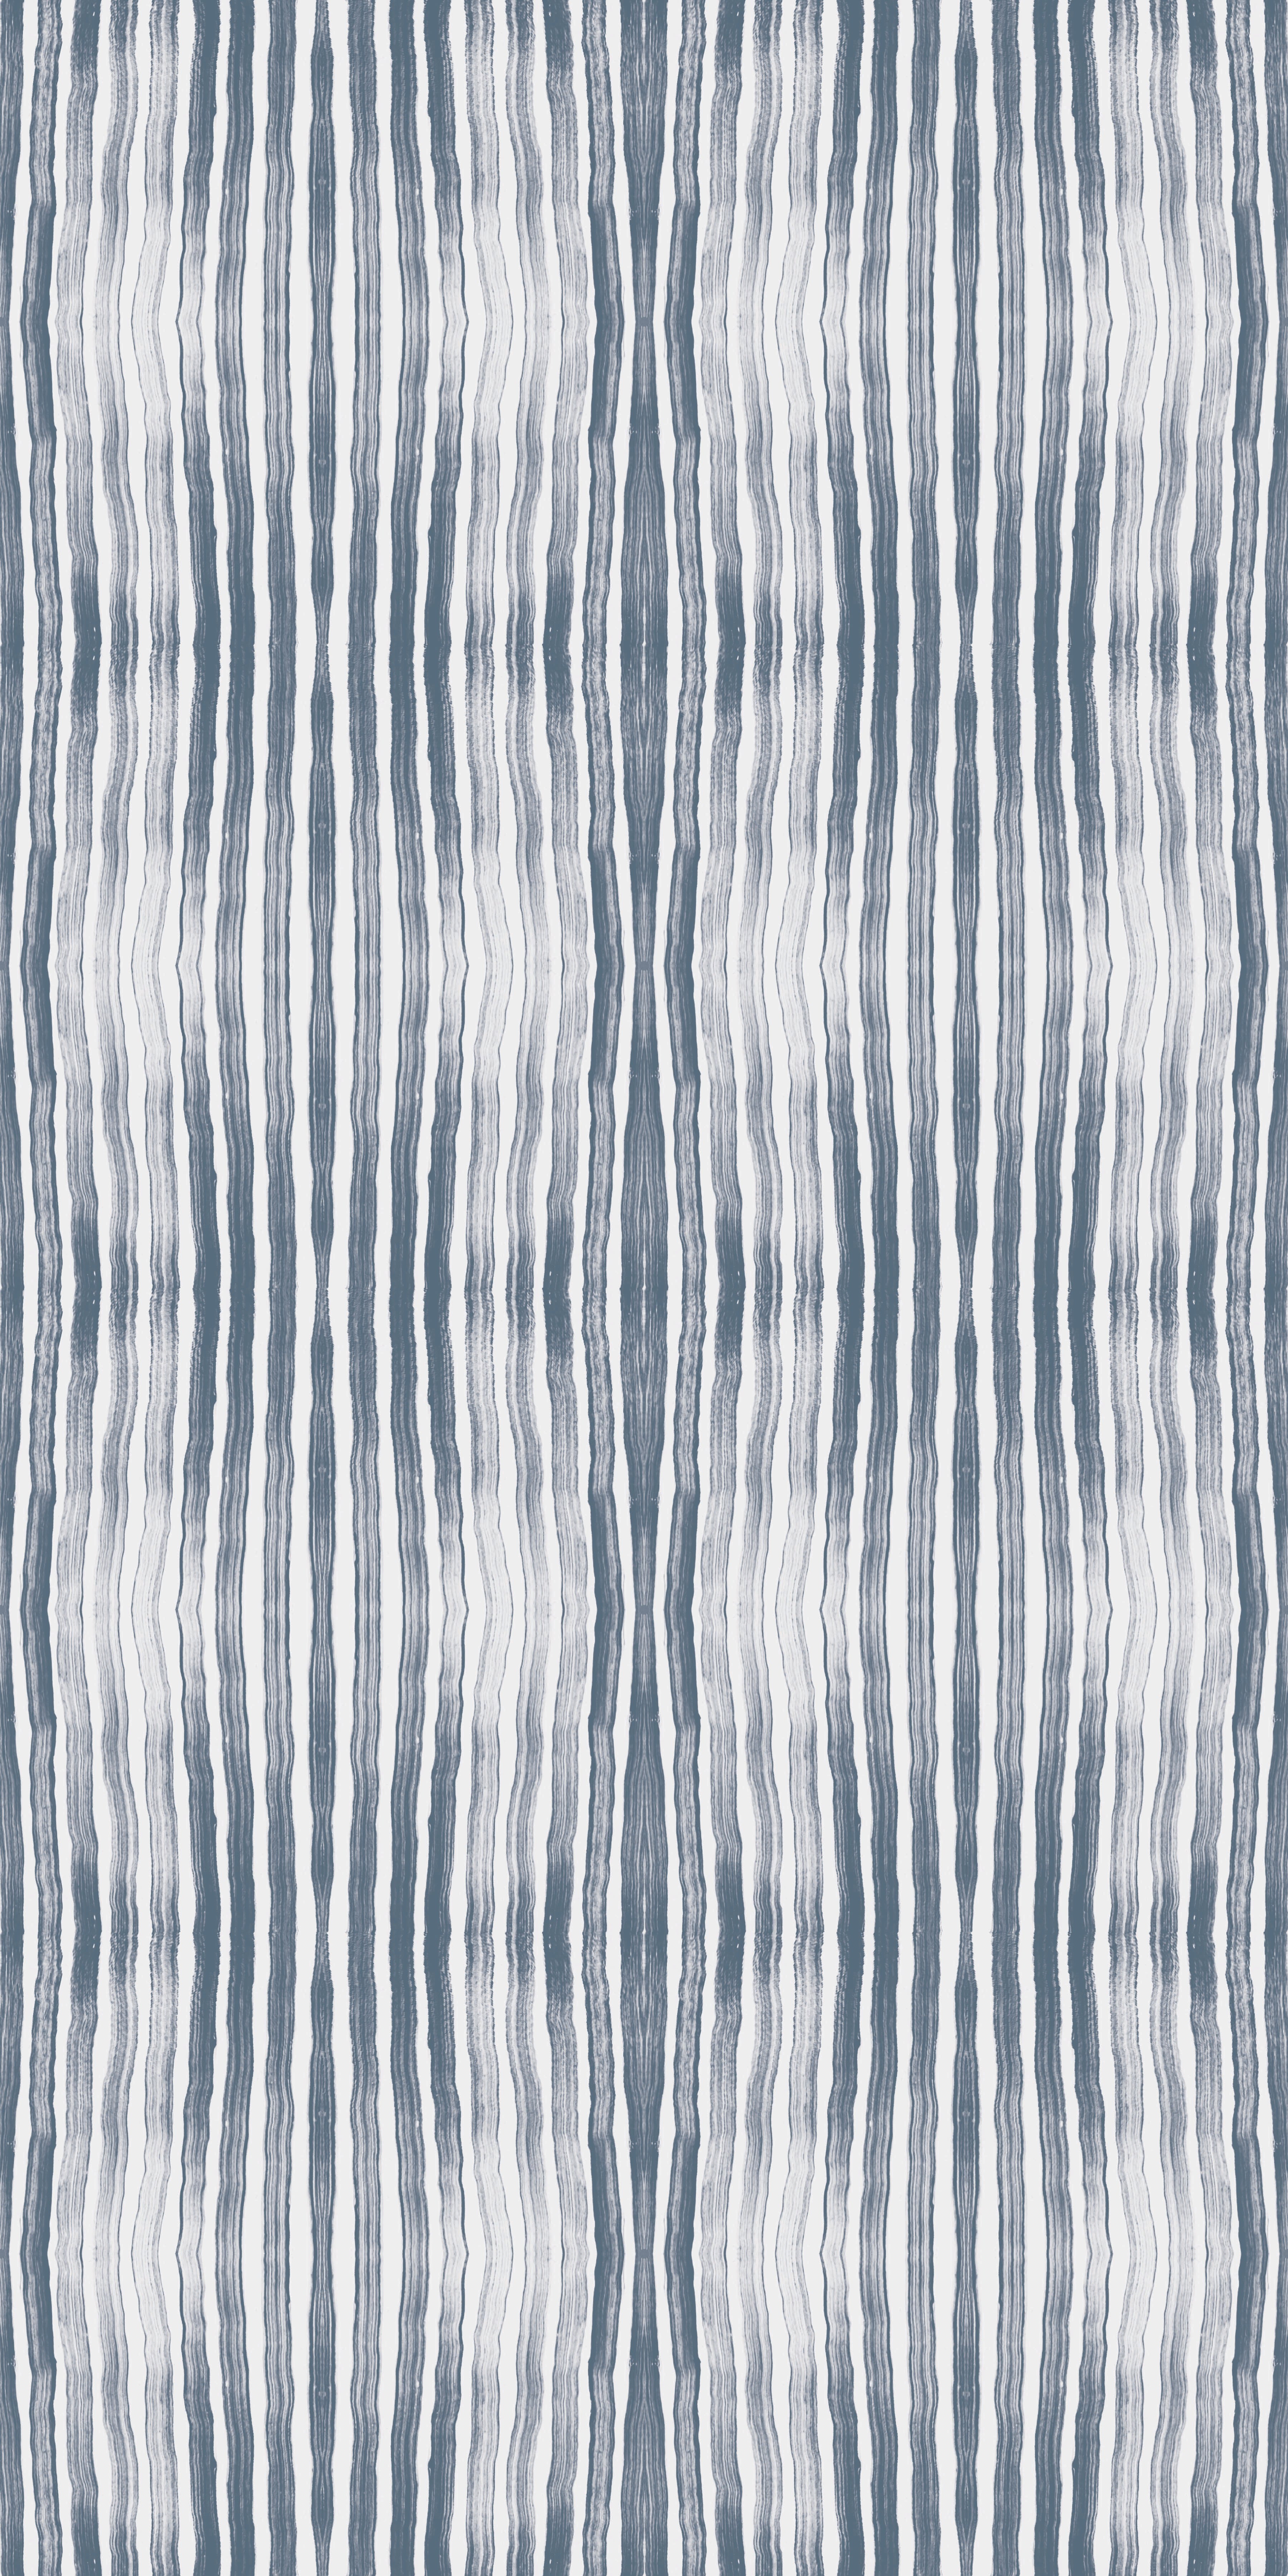 Faded Dream Peel & Stick Wallpaper - 2' x 10' - Image 1